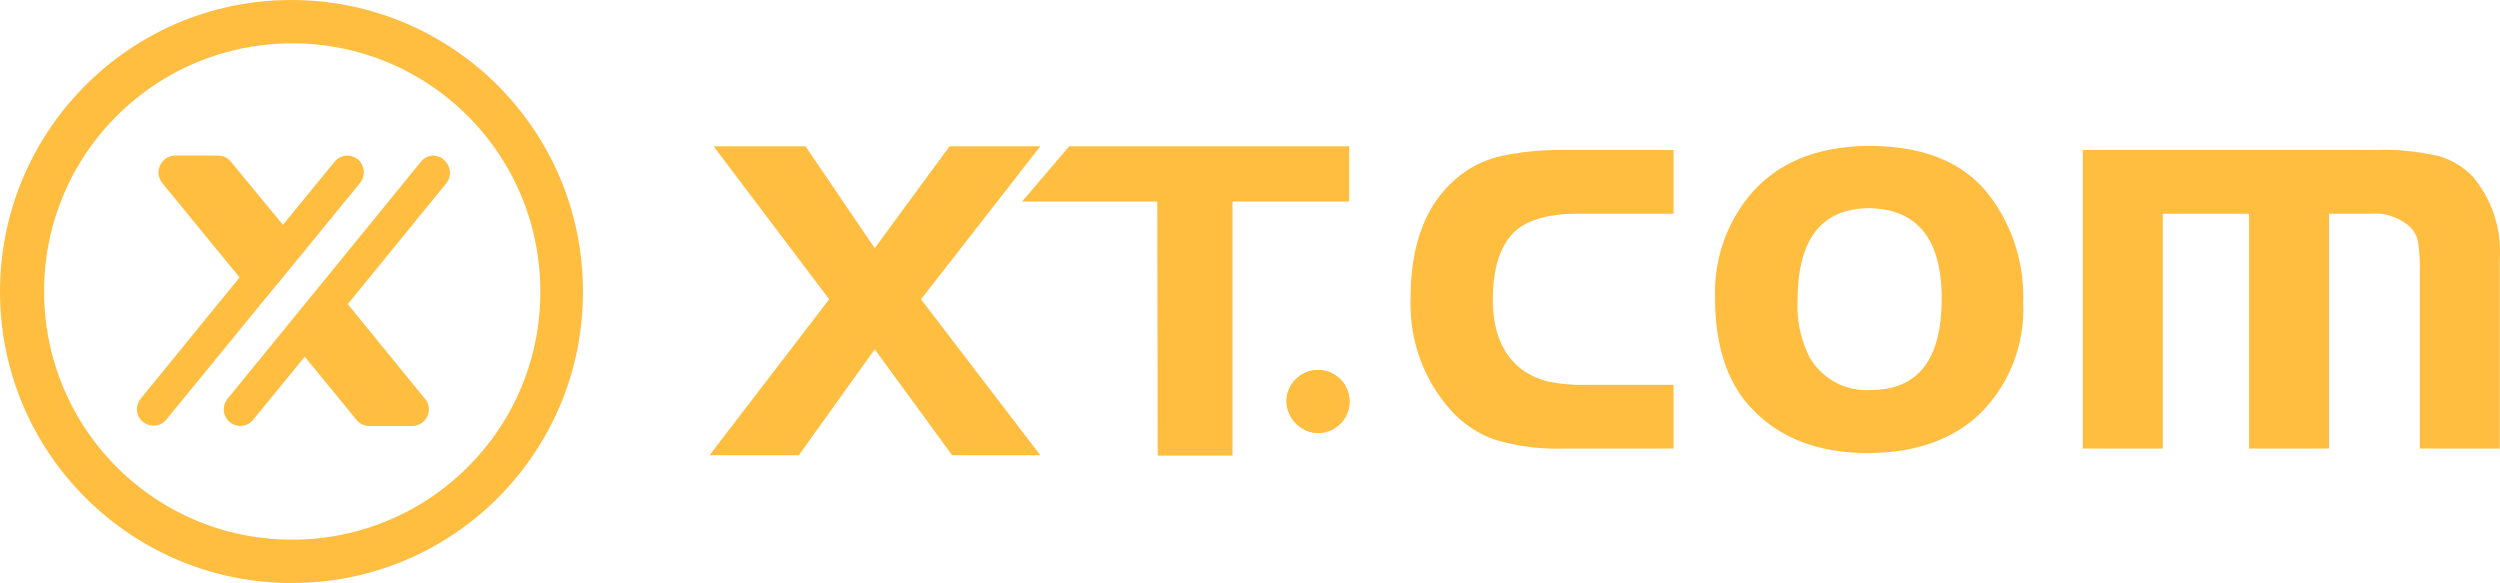 Playtcoin com. XT.com. XT биржа. XT логотип. XT биржа лого.